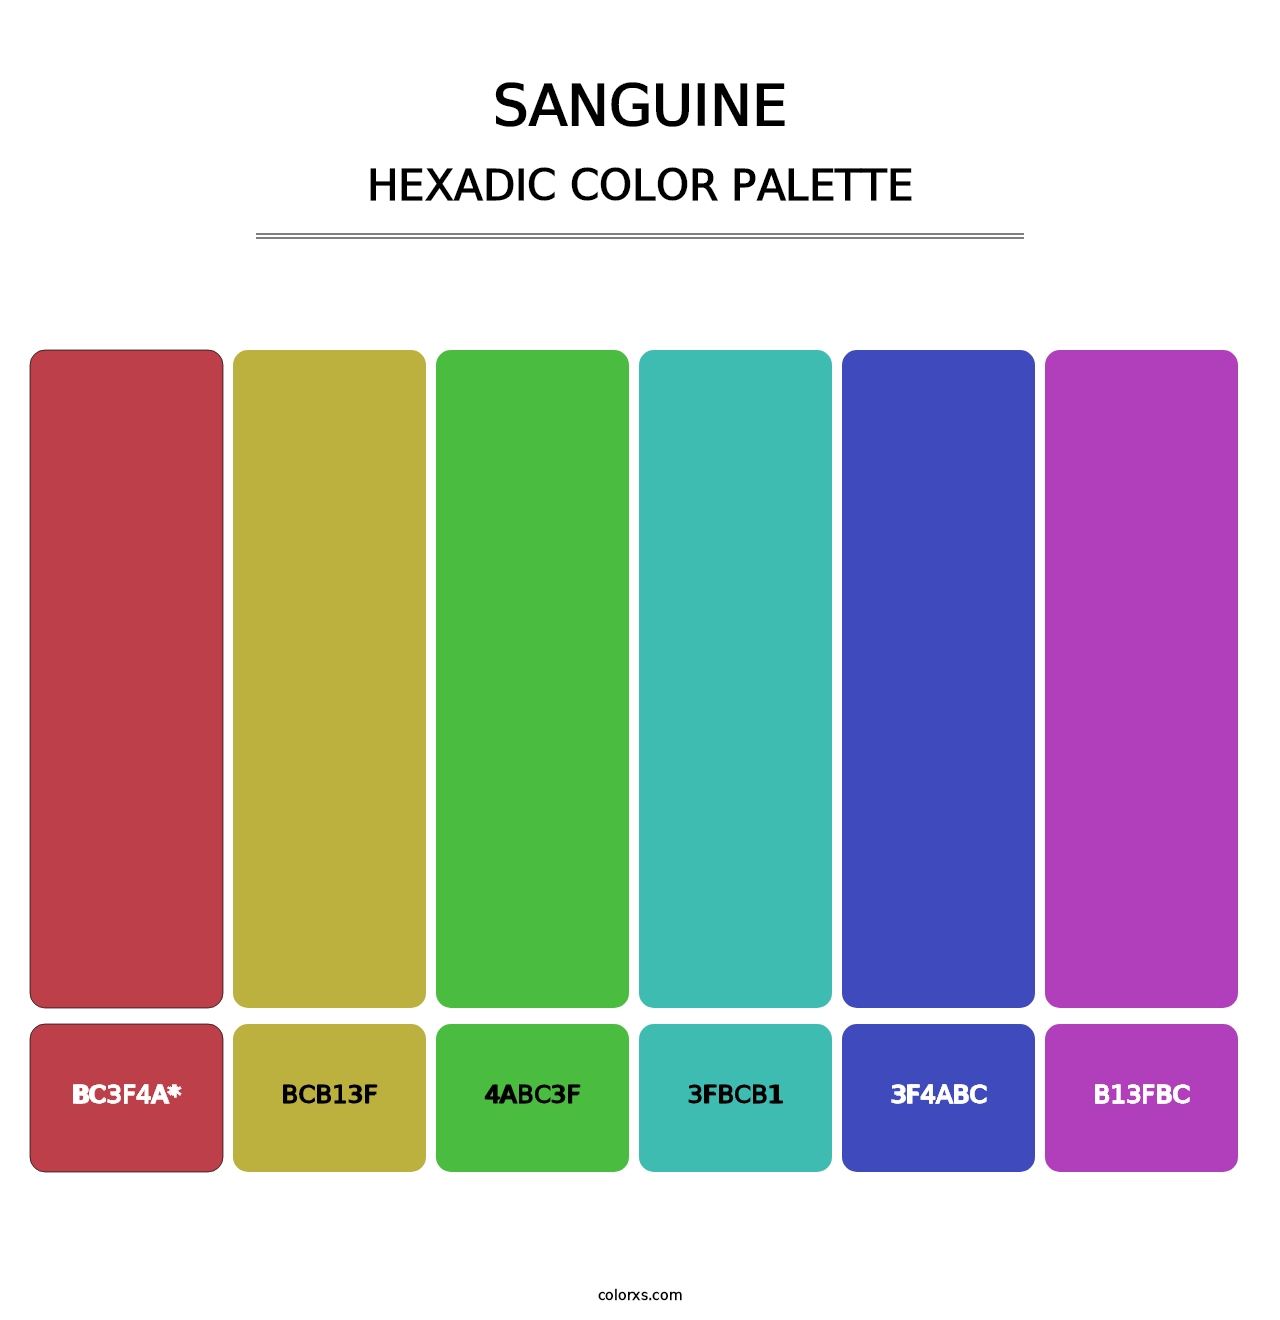 Sanguine - Hexadic Color Palette